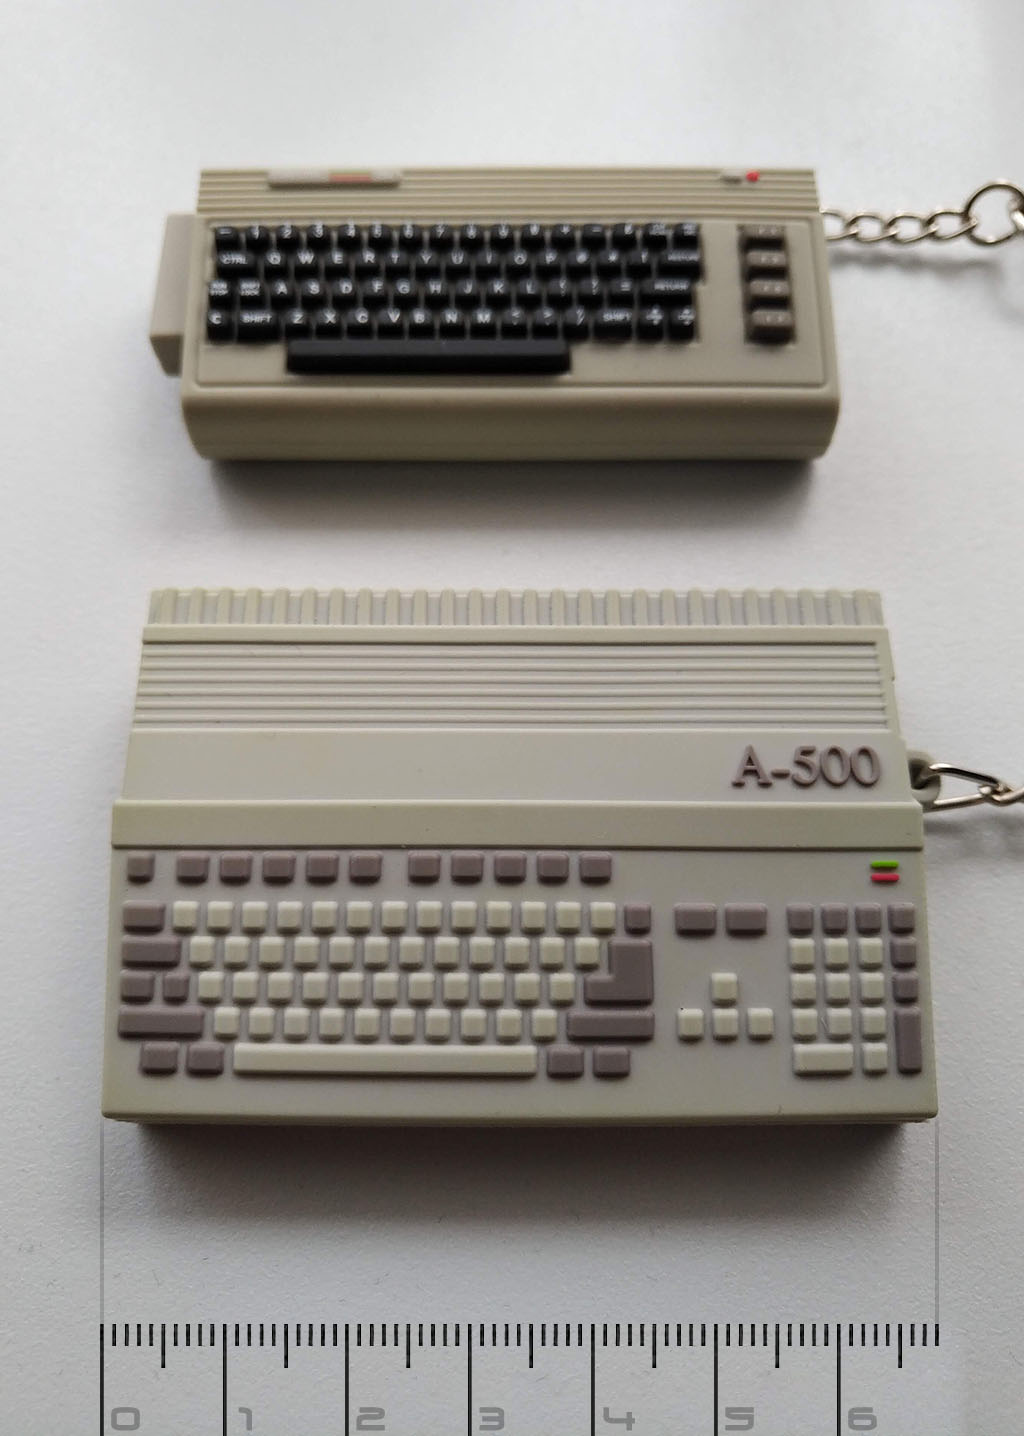 Keychain_C64_Amiga.jpg